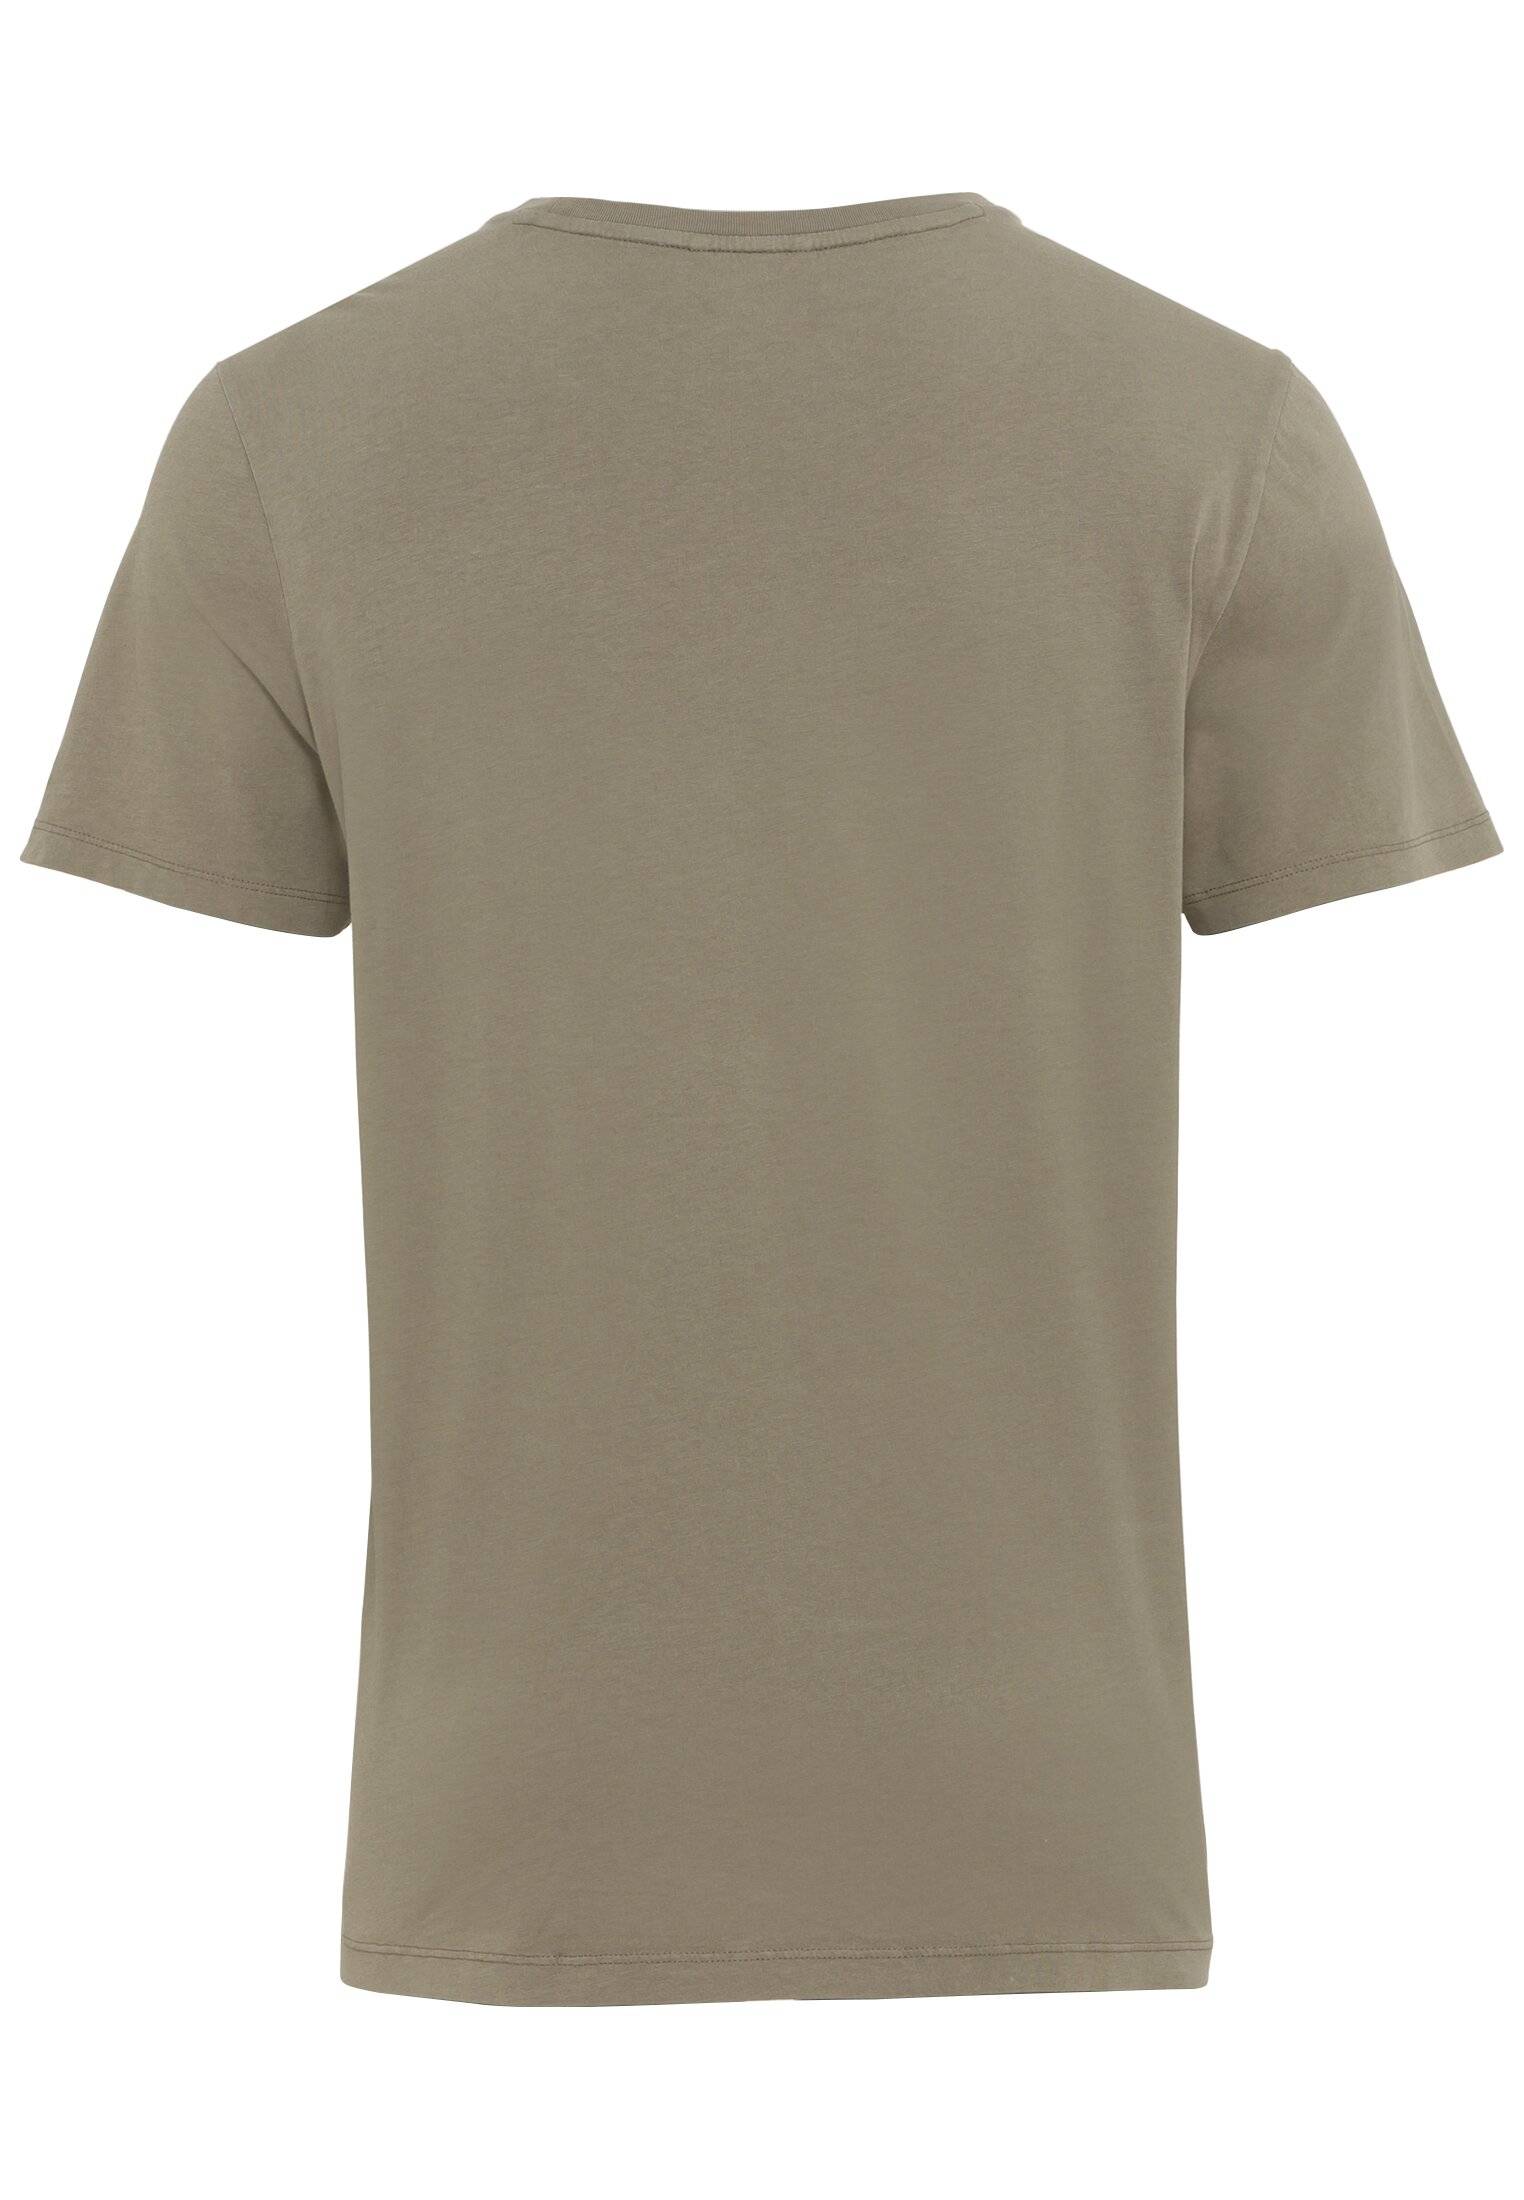 Мужская футболка Camel Active, хаки, размер 46 - фото 2